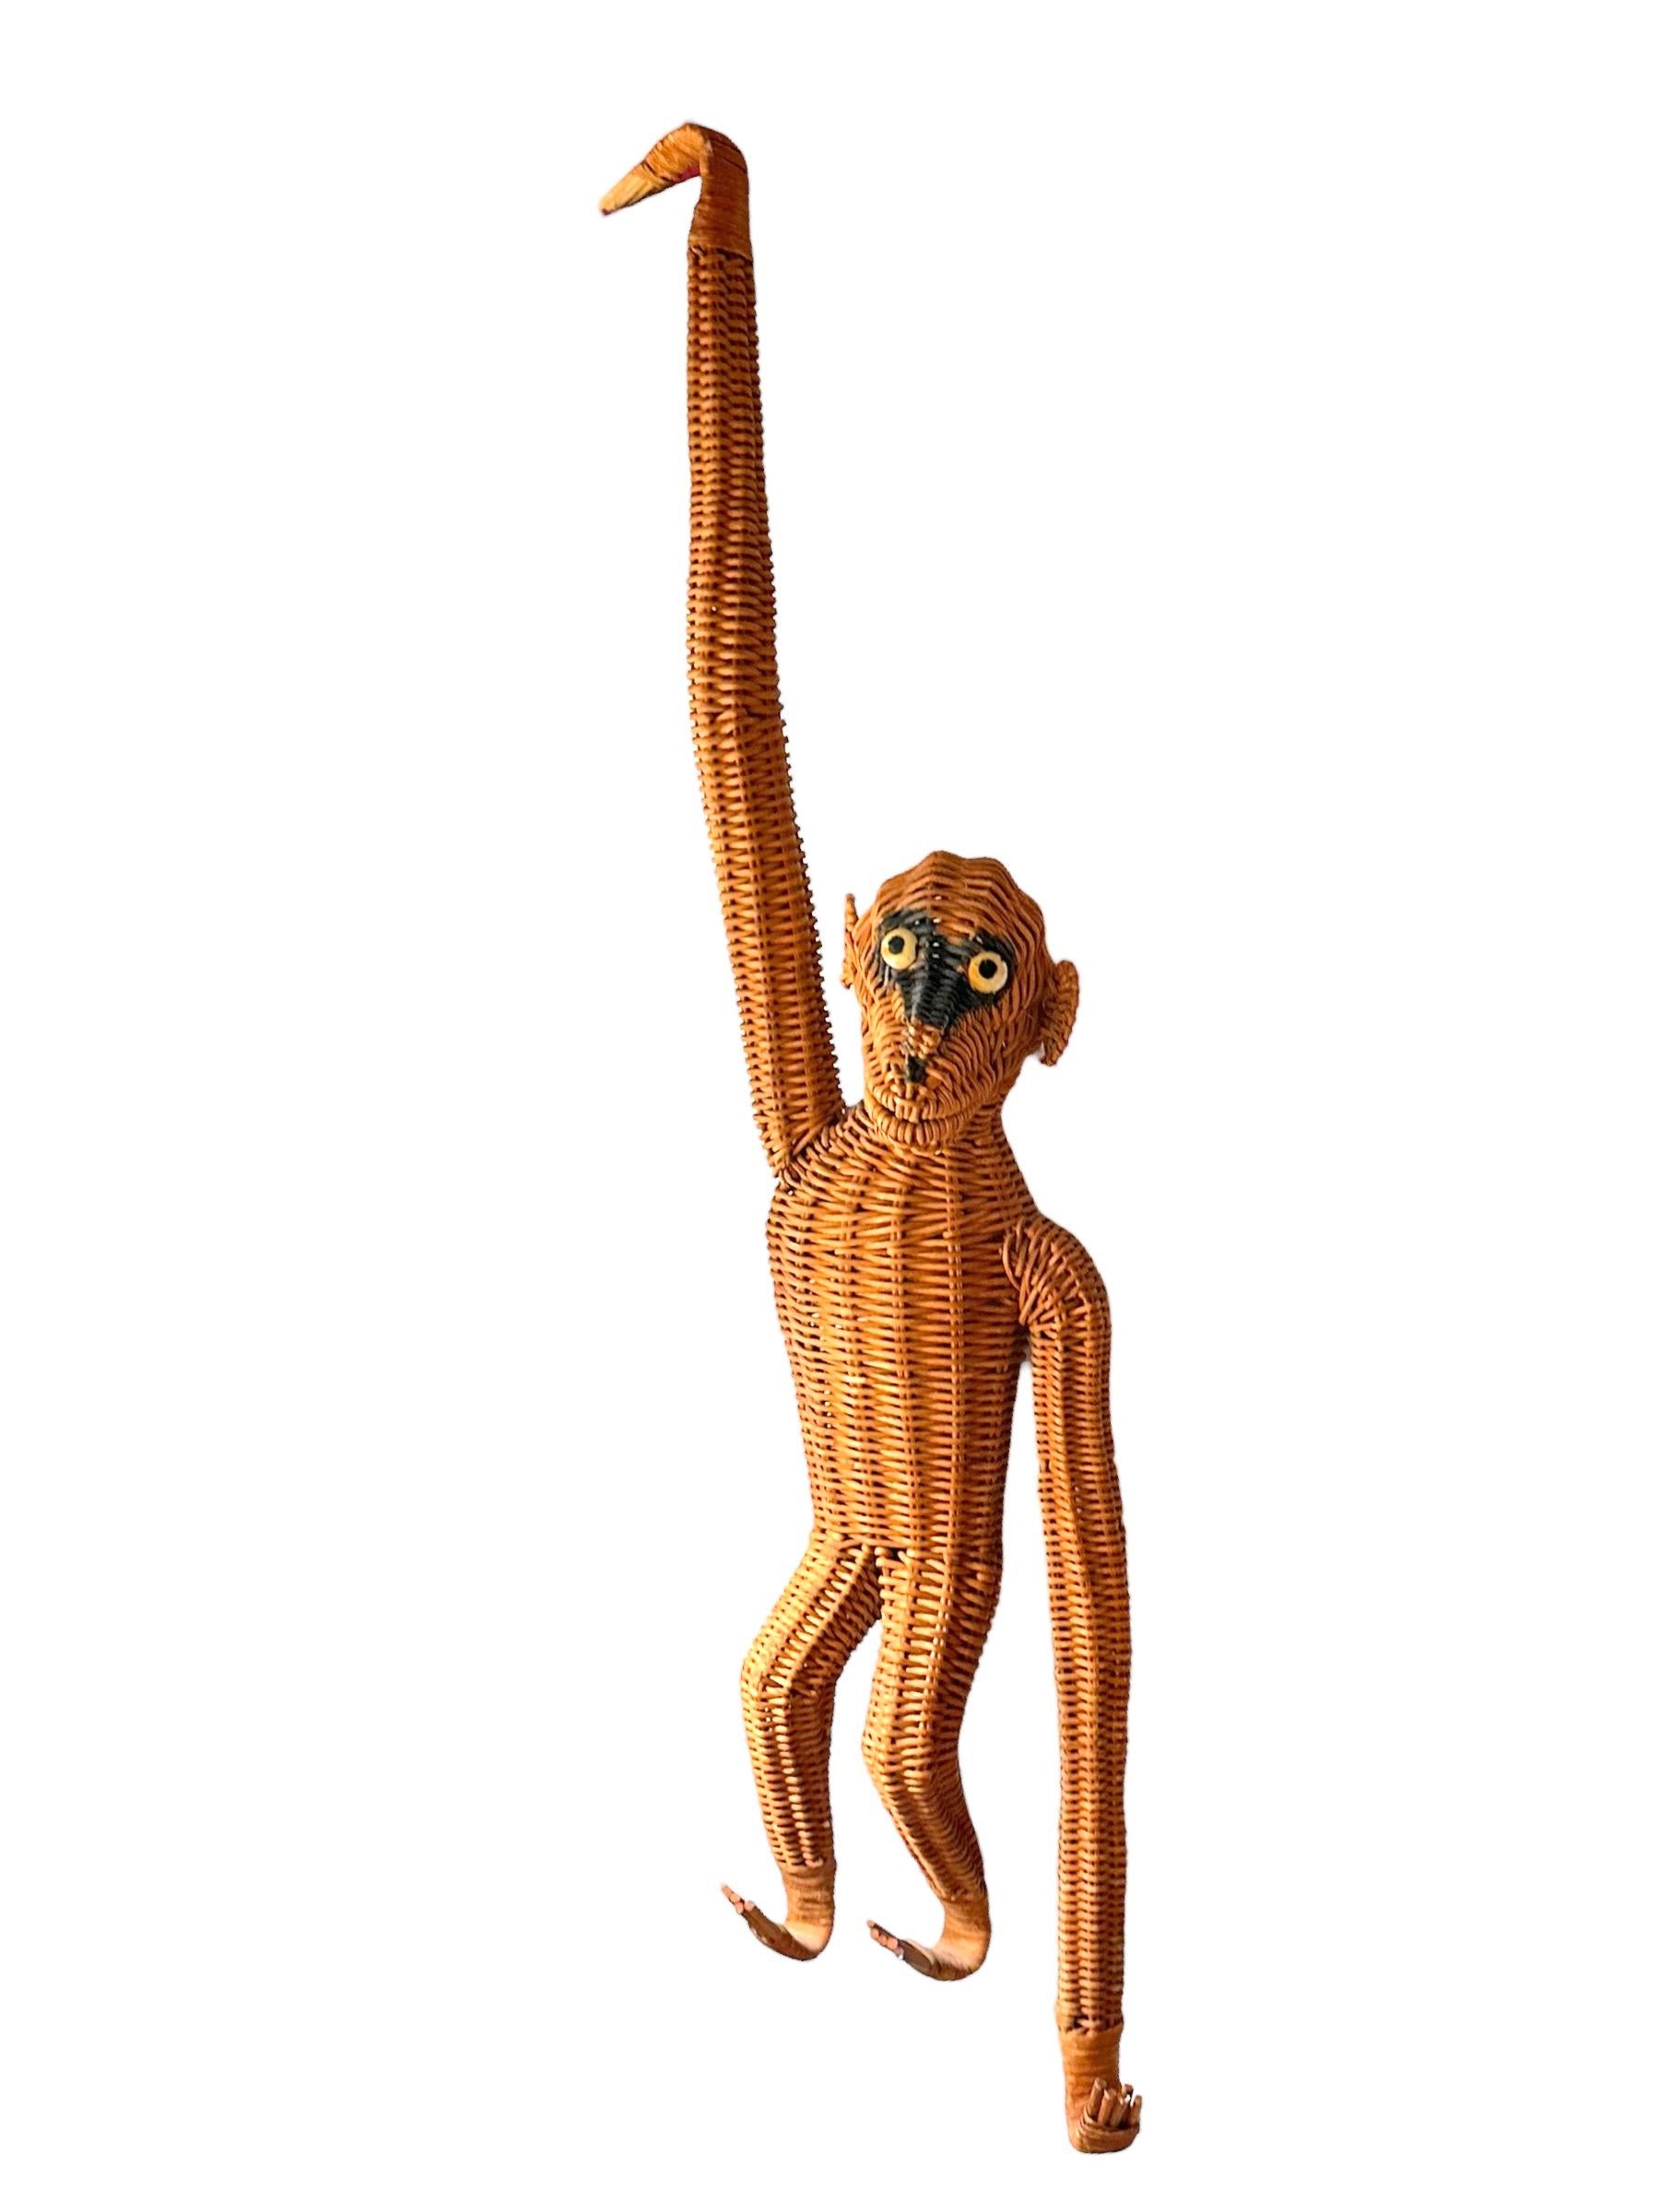 Mid-Century Modern Monkey Ape Rattan Wicker Hanging Figure 1970s, France For Sale 4